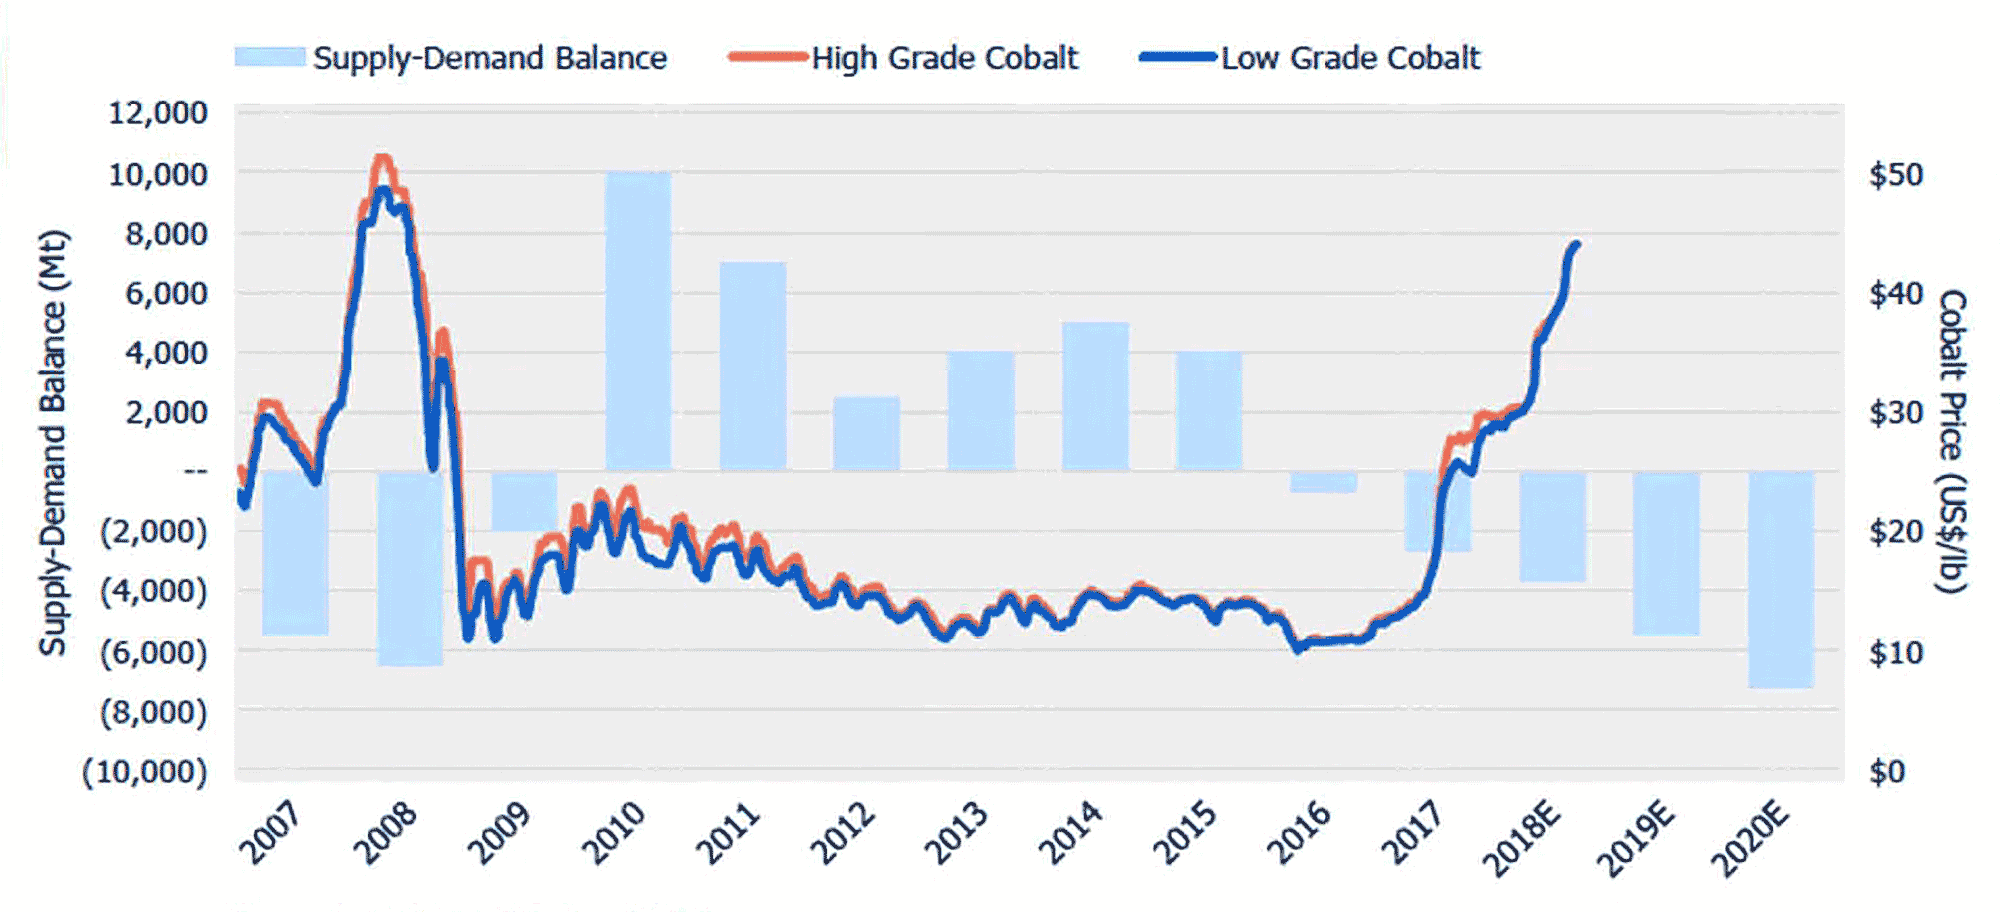 Supply-Demand Balance and Historical Cobalt Prices - Source: Darton Commodities, Metal Bulletin